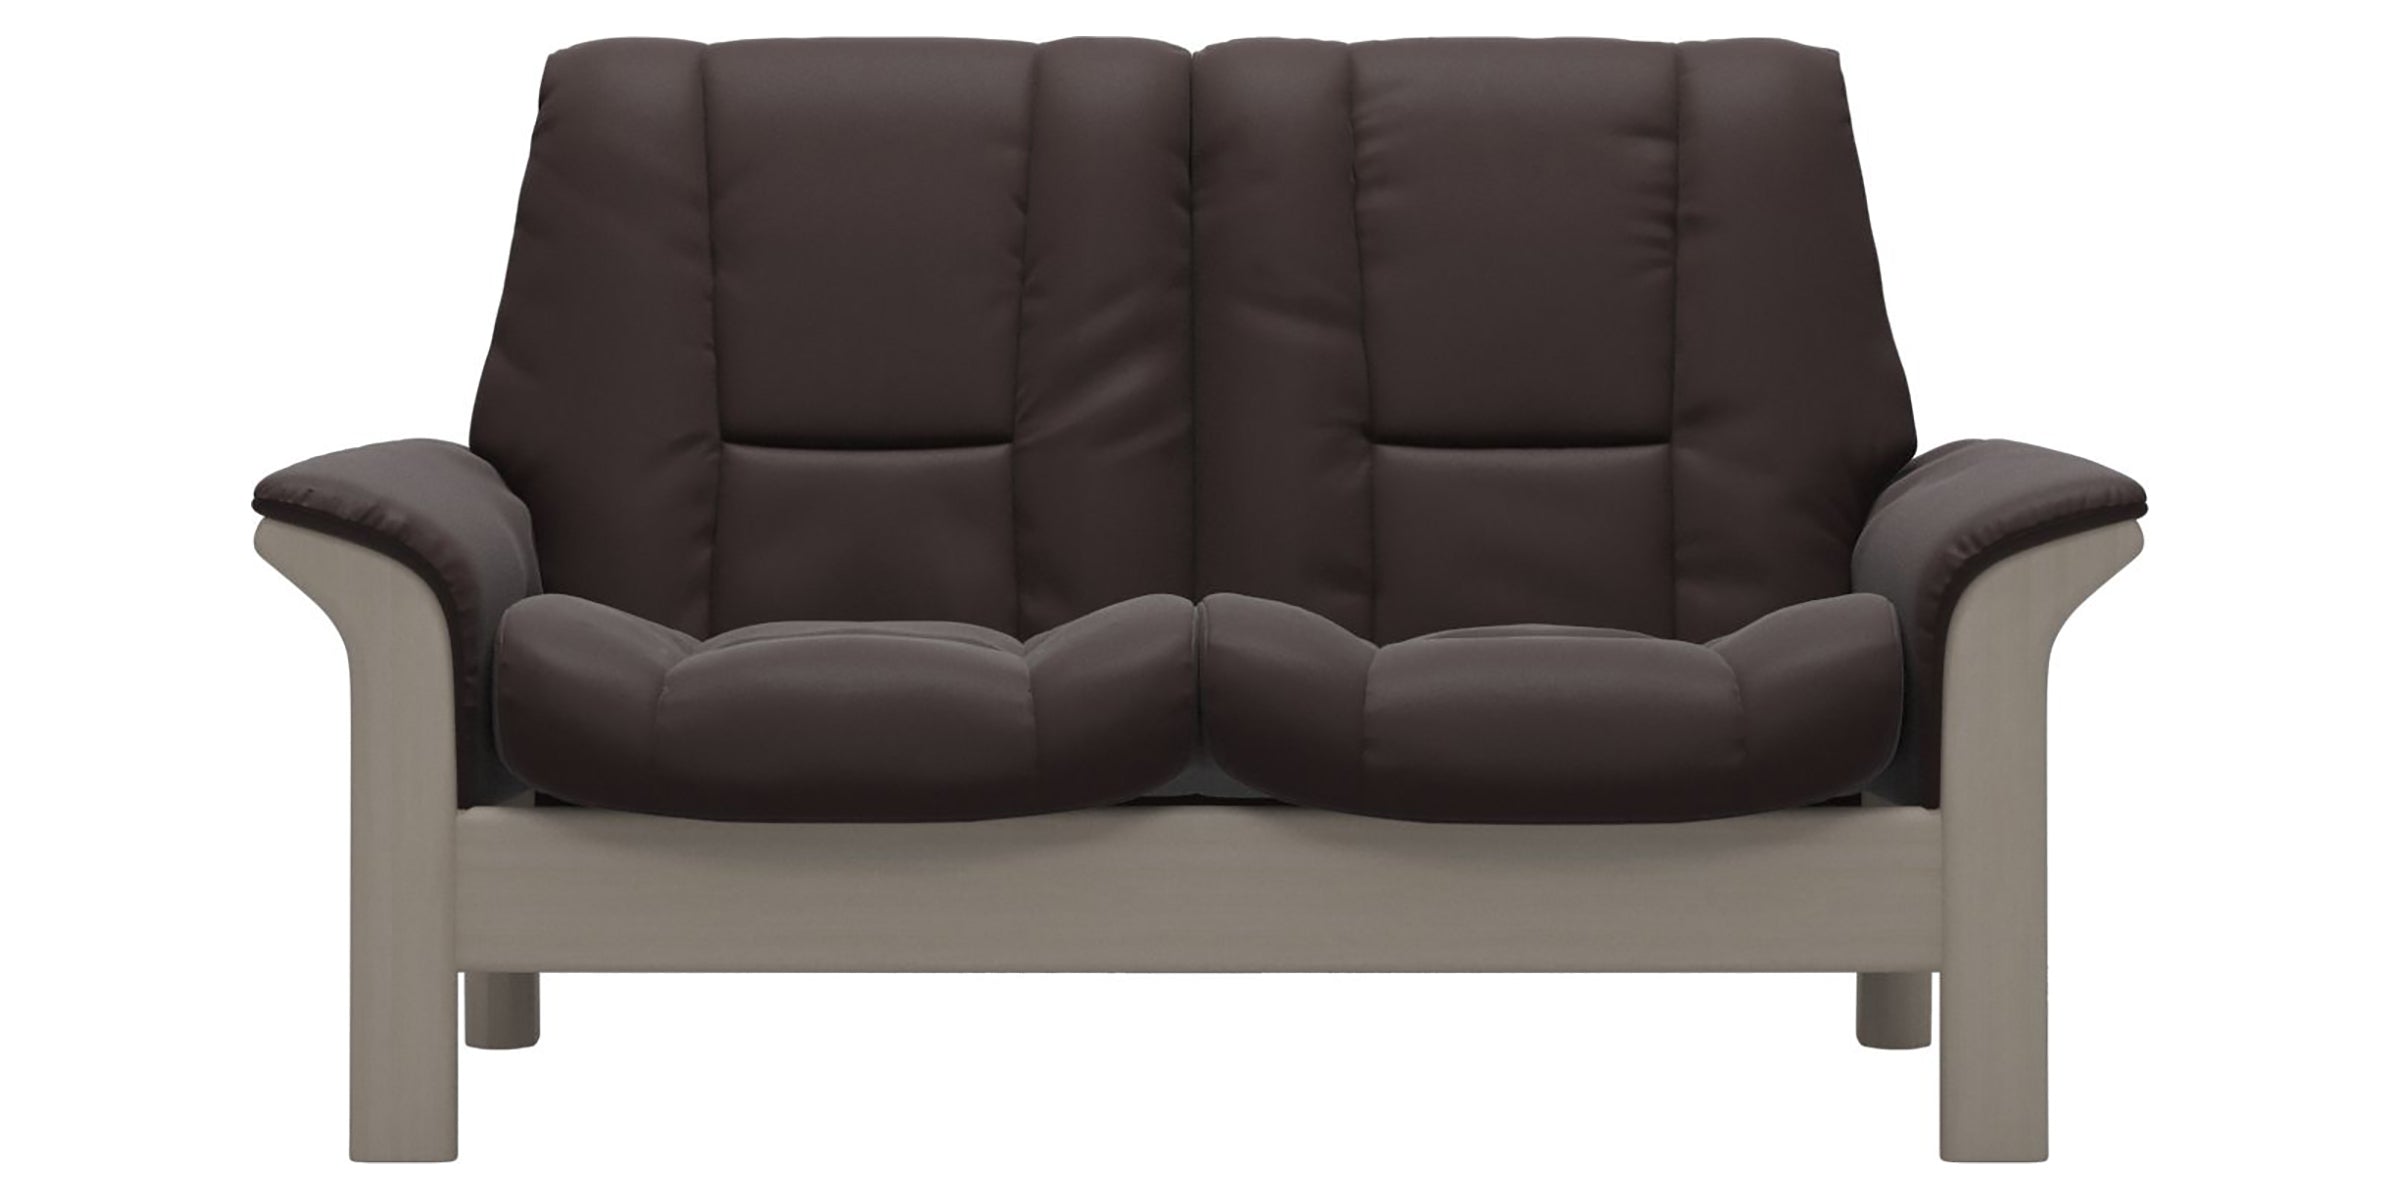 Paloma Leather Chocolate and Whitewash Base | Stressless Windsor 2-Seater Low Back Sofa | Valley Ridge Furniture